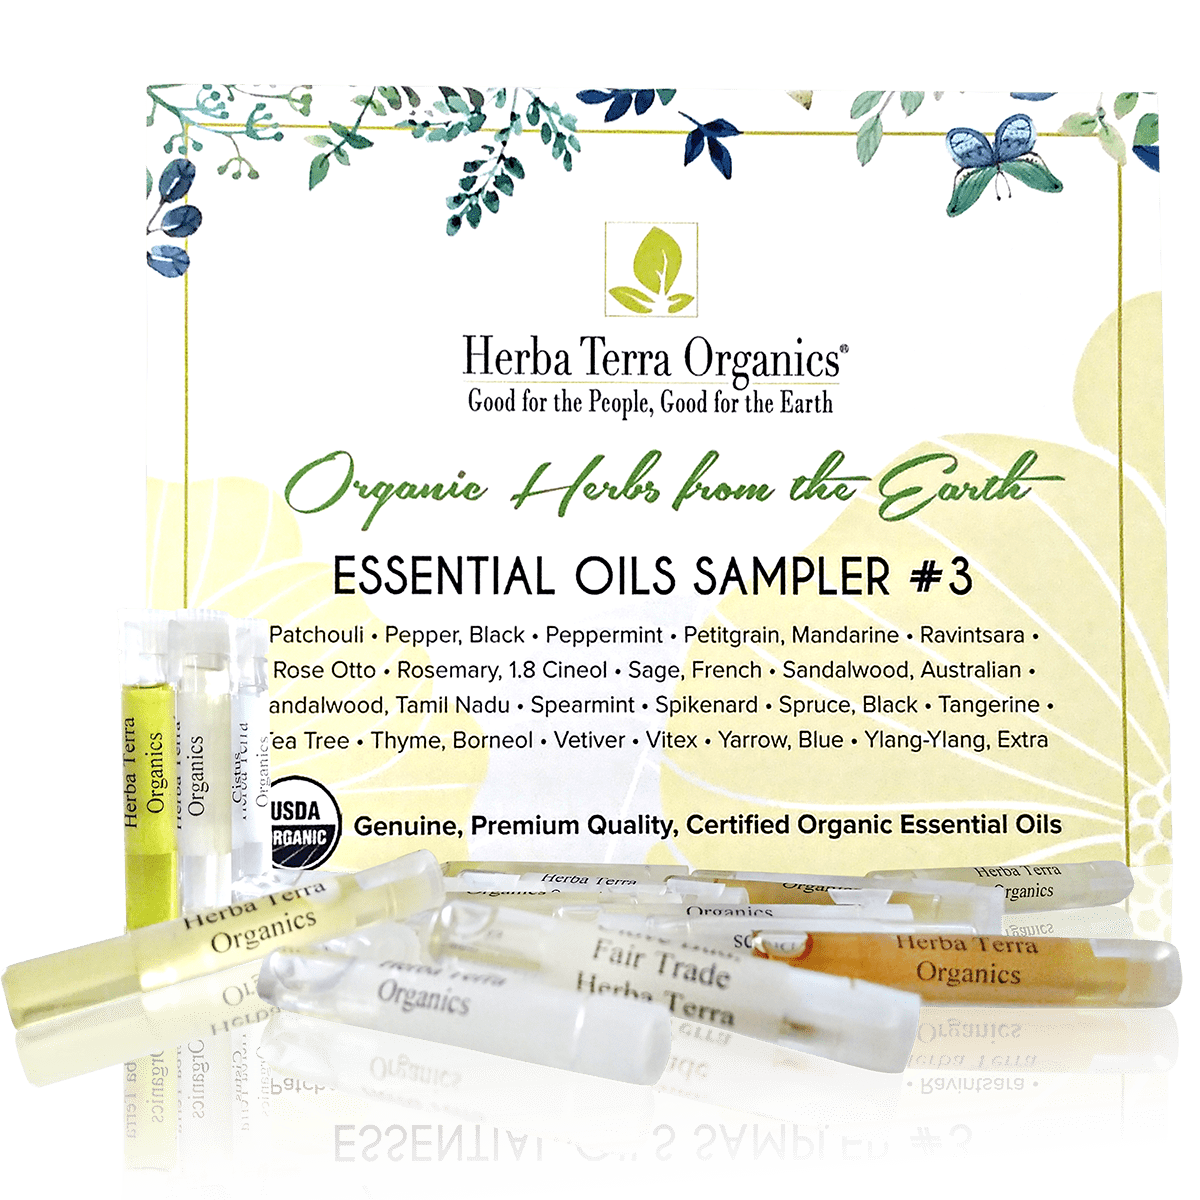 Essential Oils Sampler #3 - Herba Vera Organics